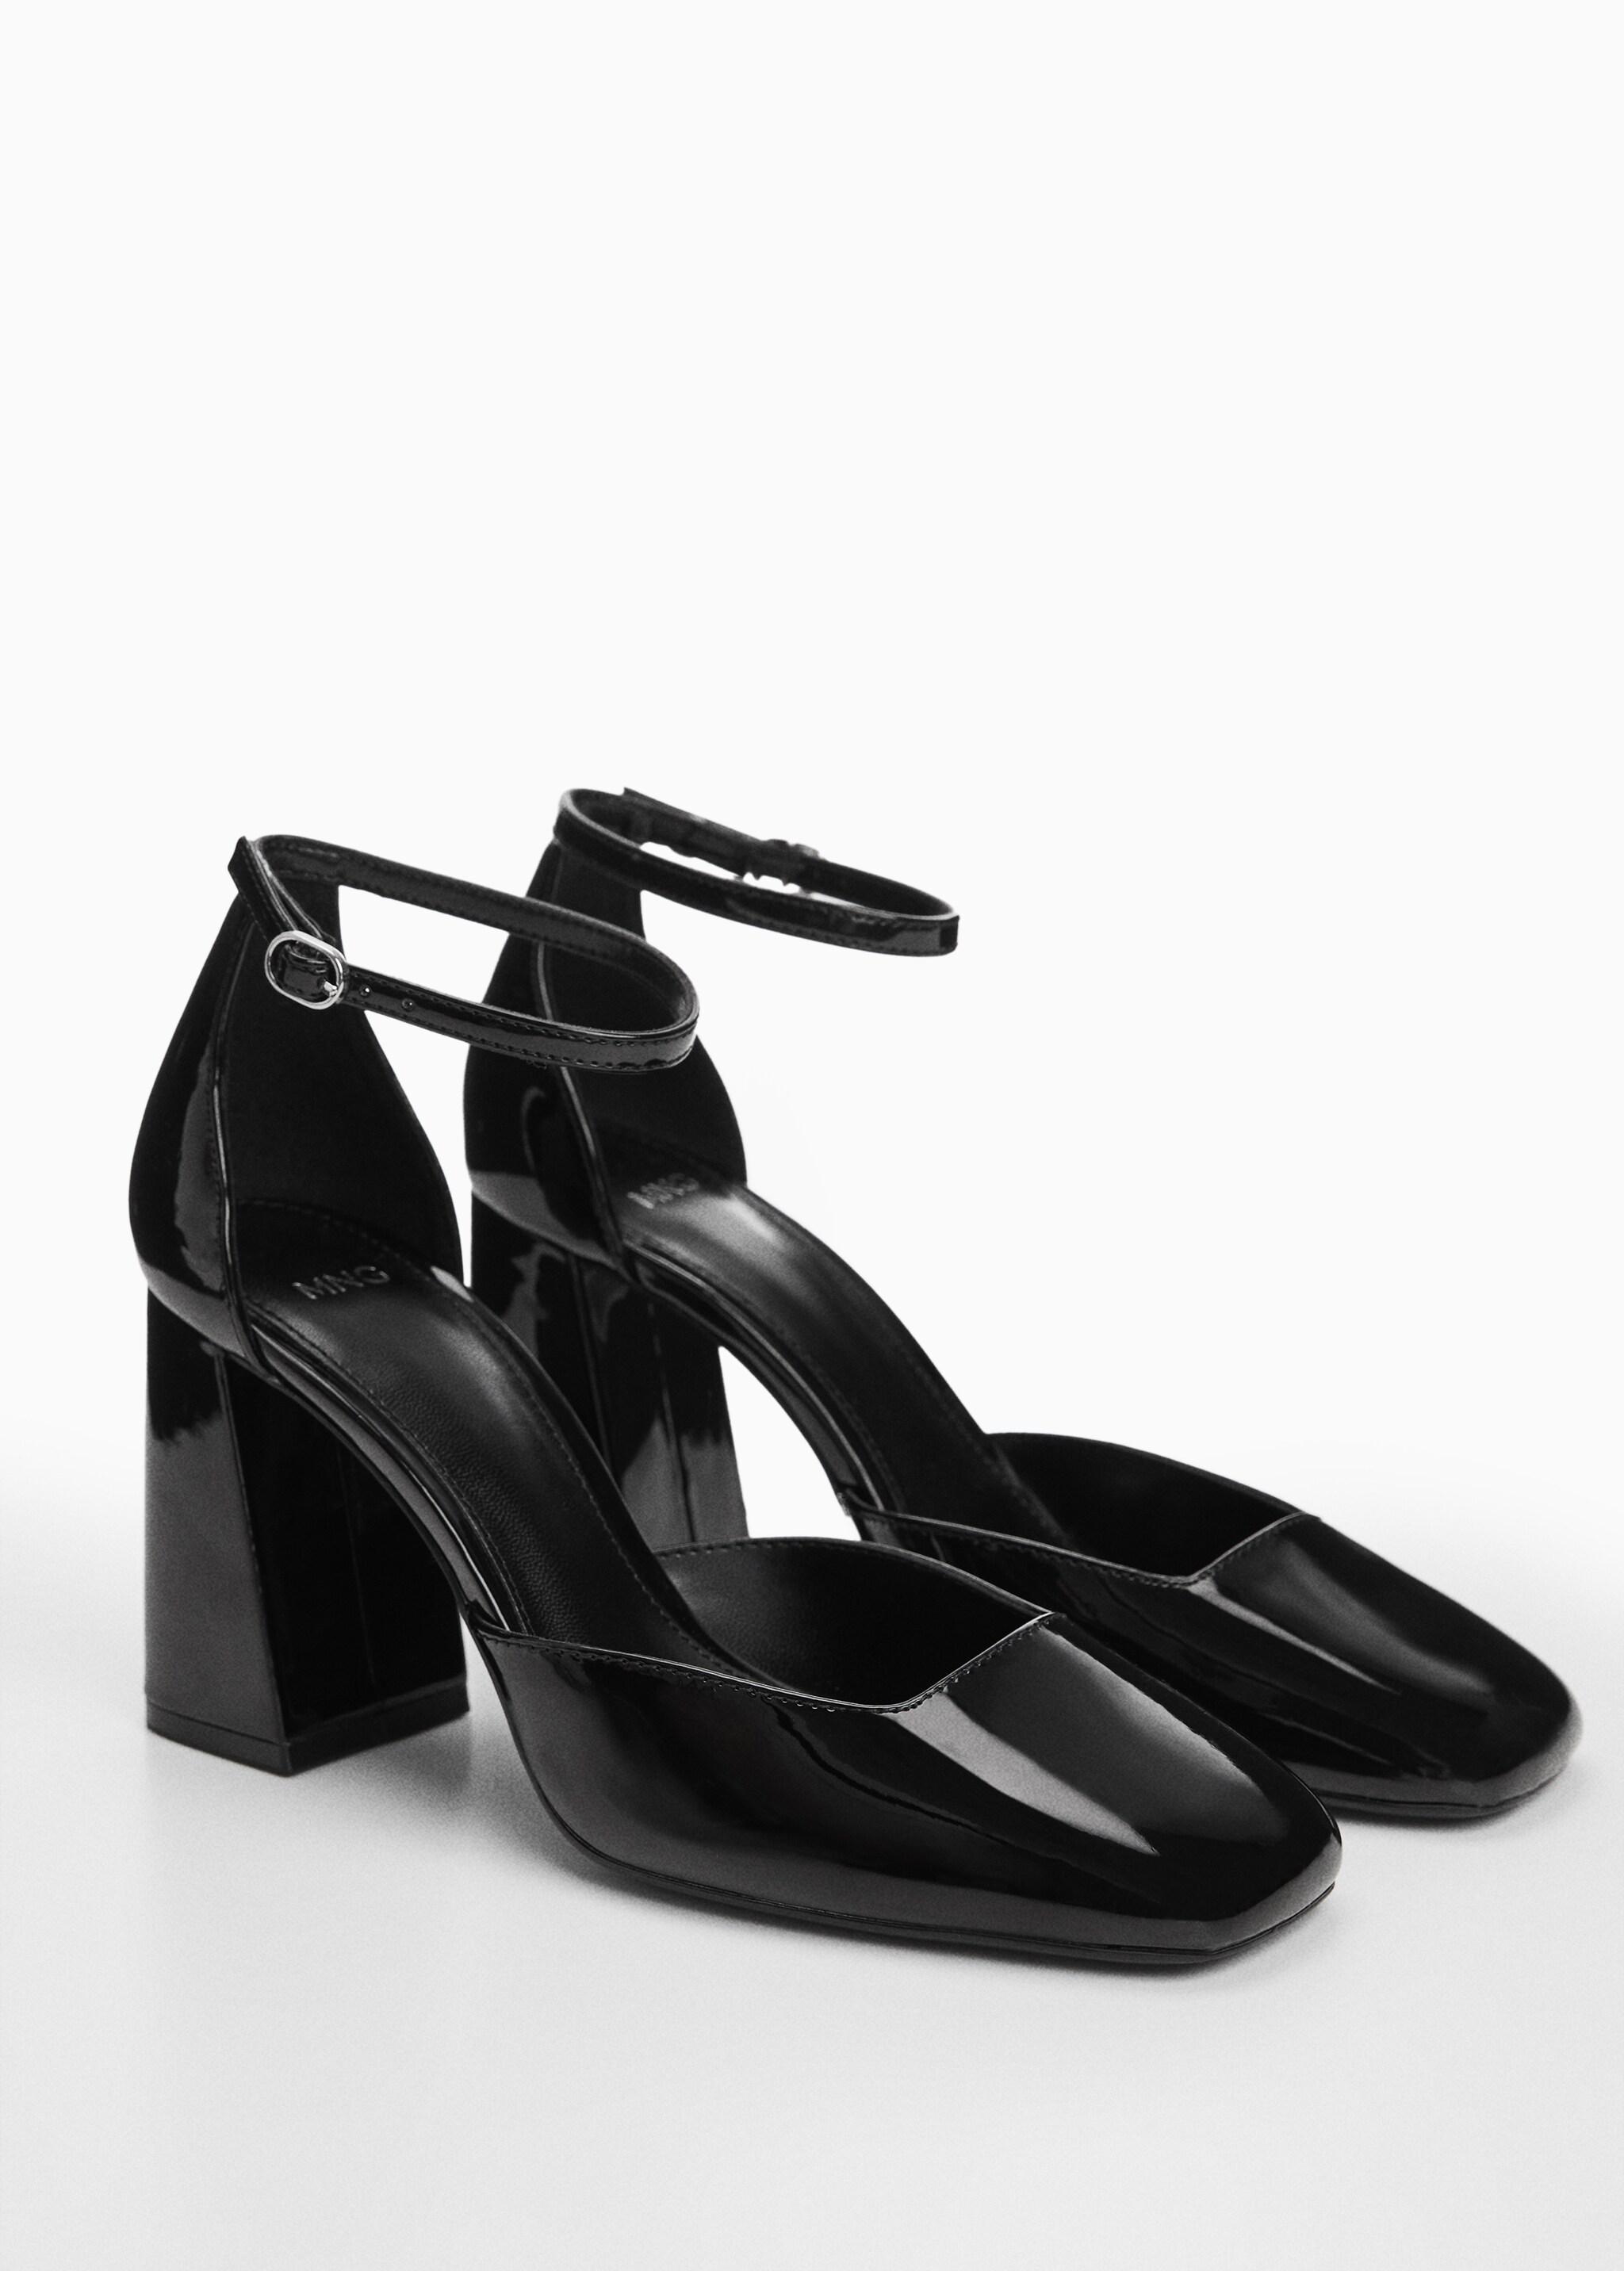 Patent leather-effect heeled shoes - Medium plane